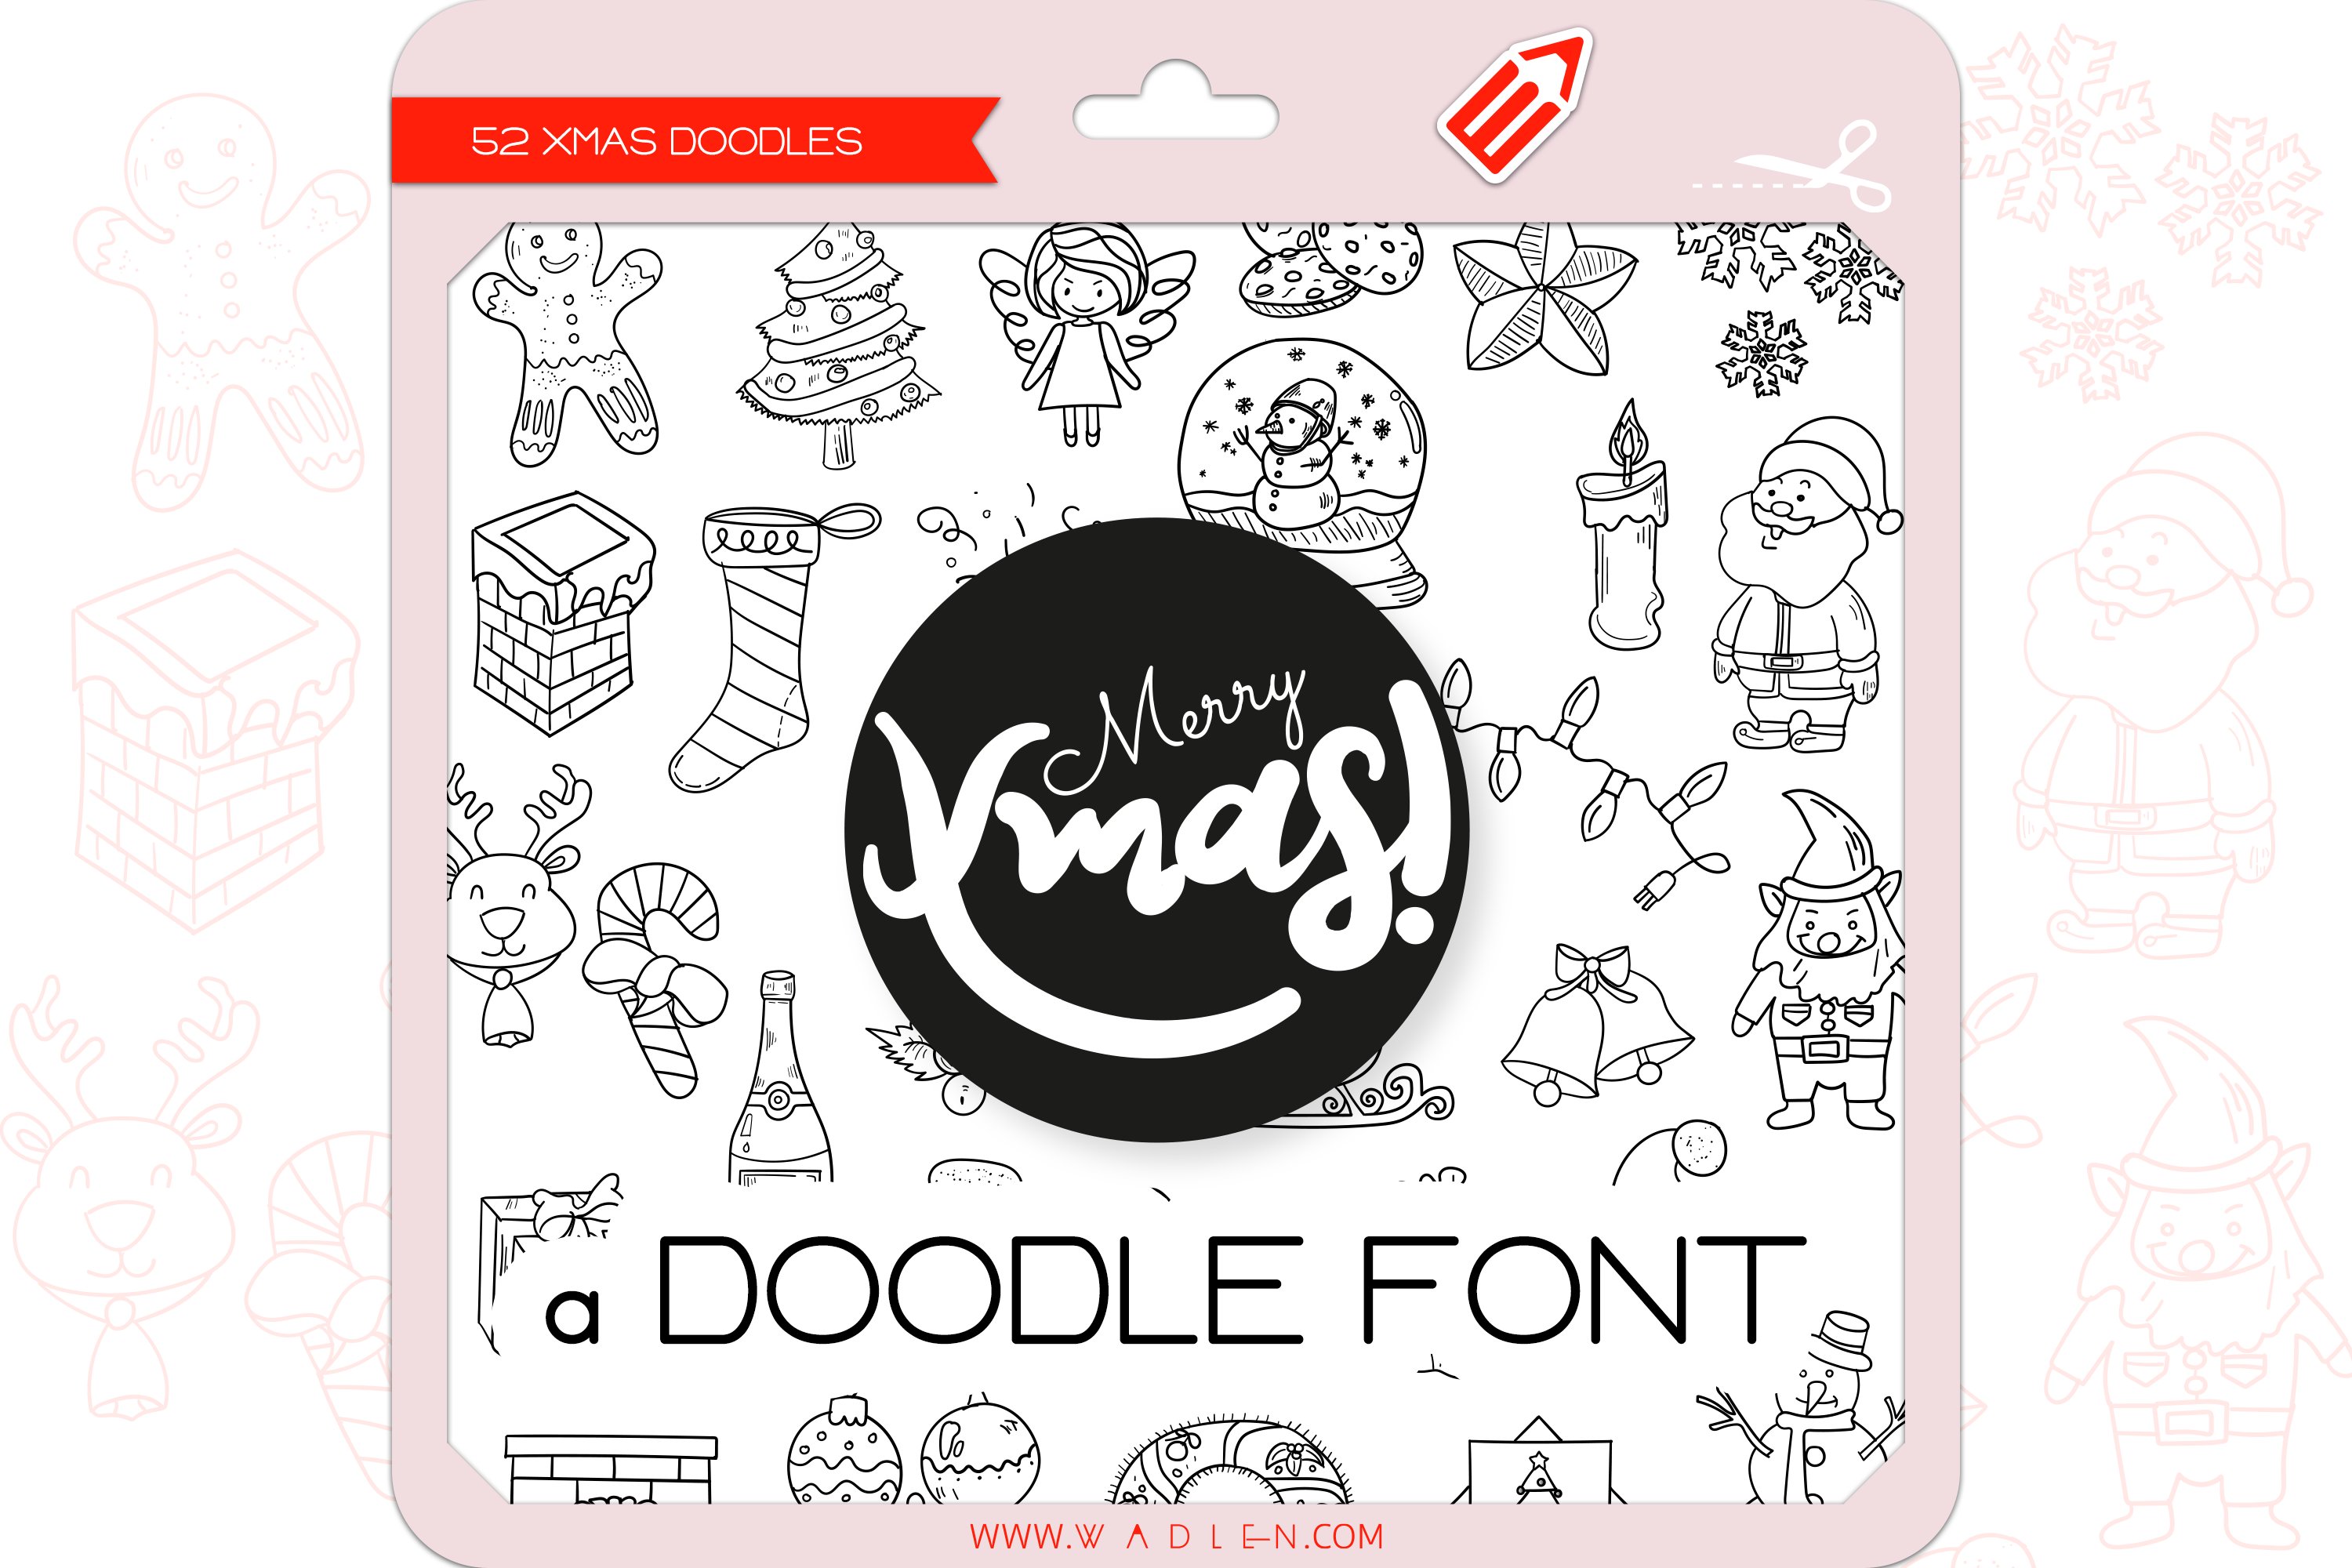 Xmas Doodles - Dingbats Font cover image.